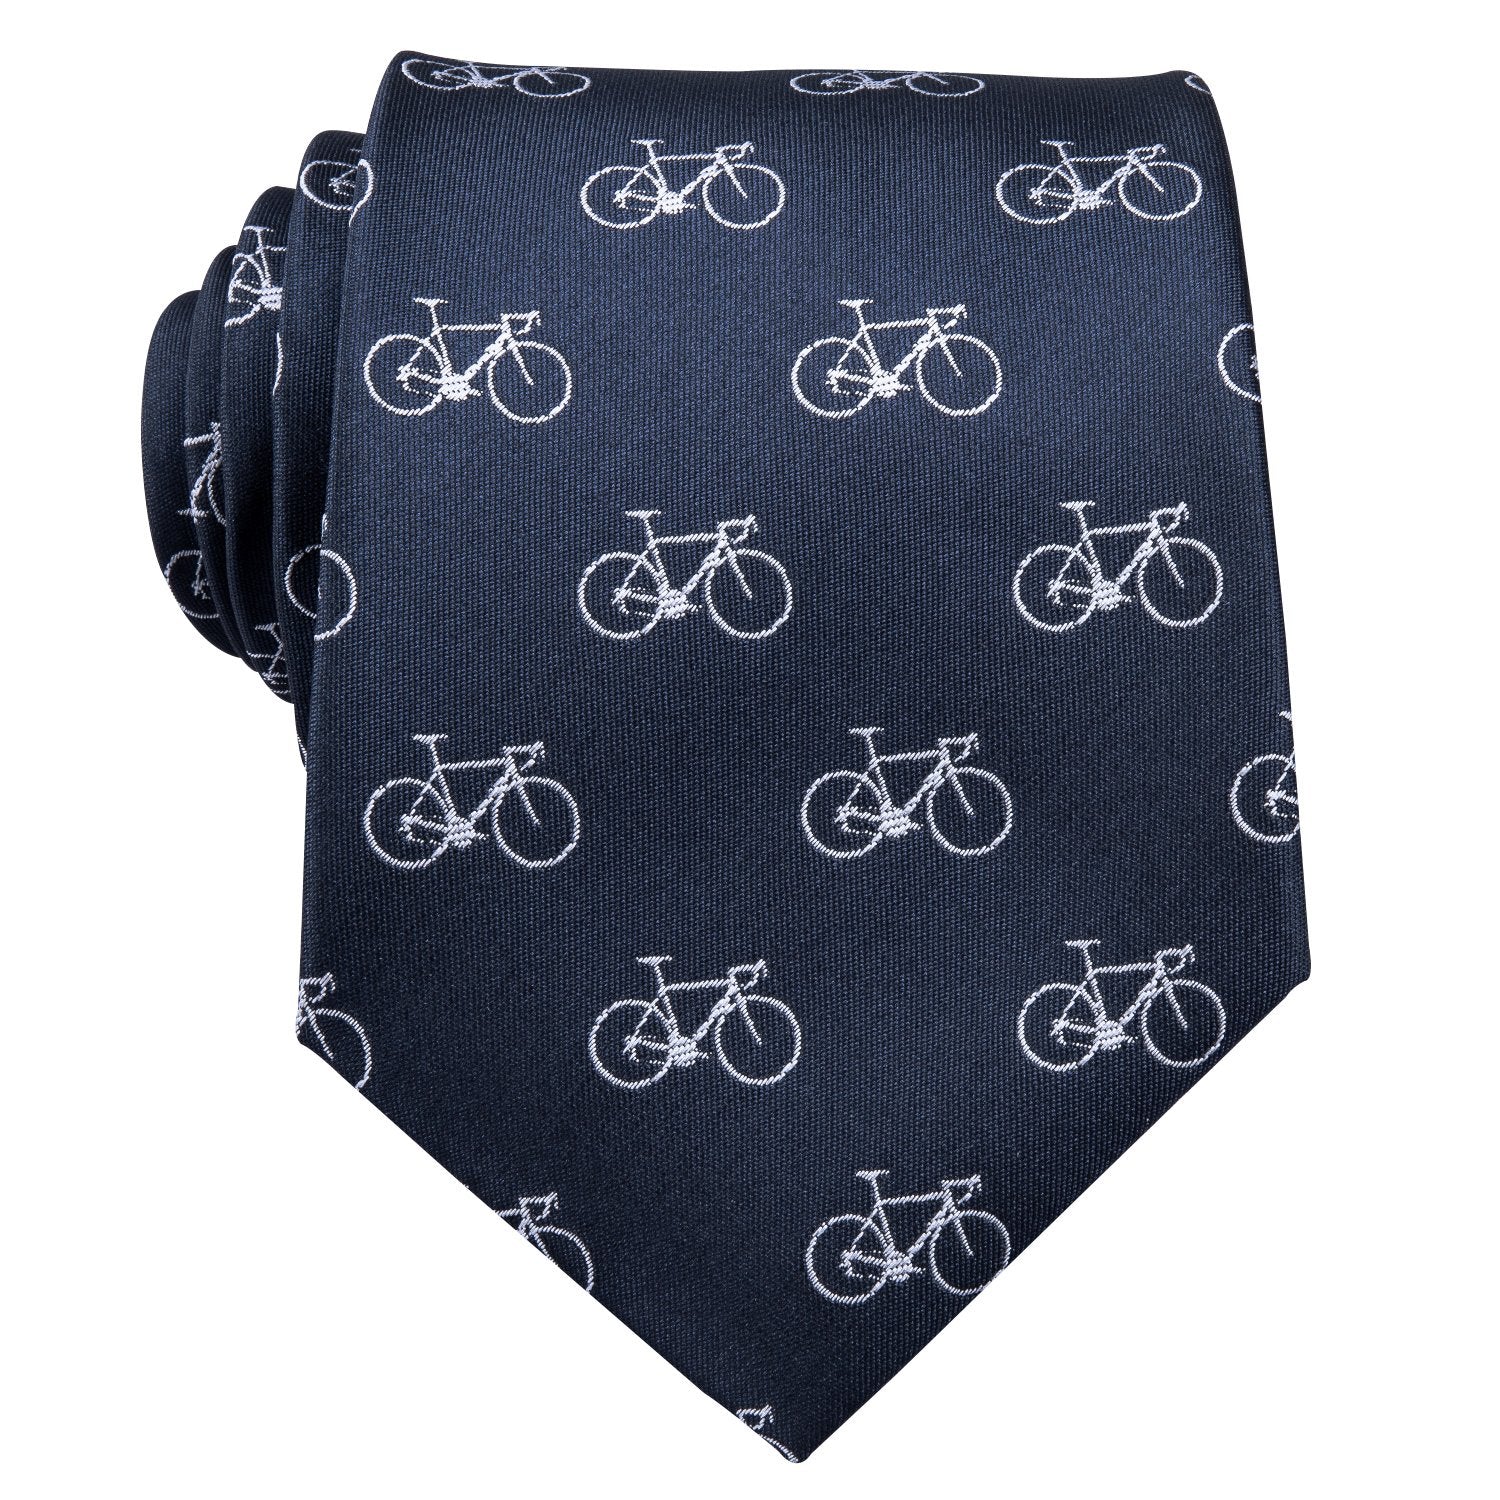 Bike Deep Blue Novelty Silk Men's Tie Hanky Cufflinks Set - barry-wang